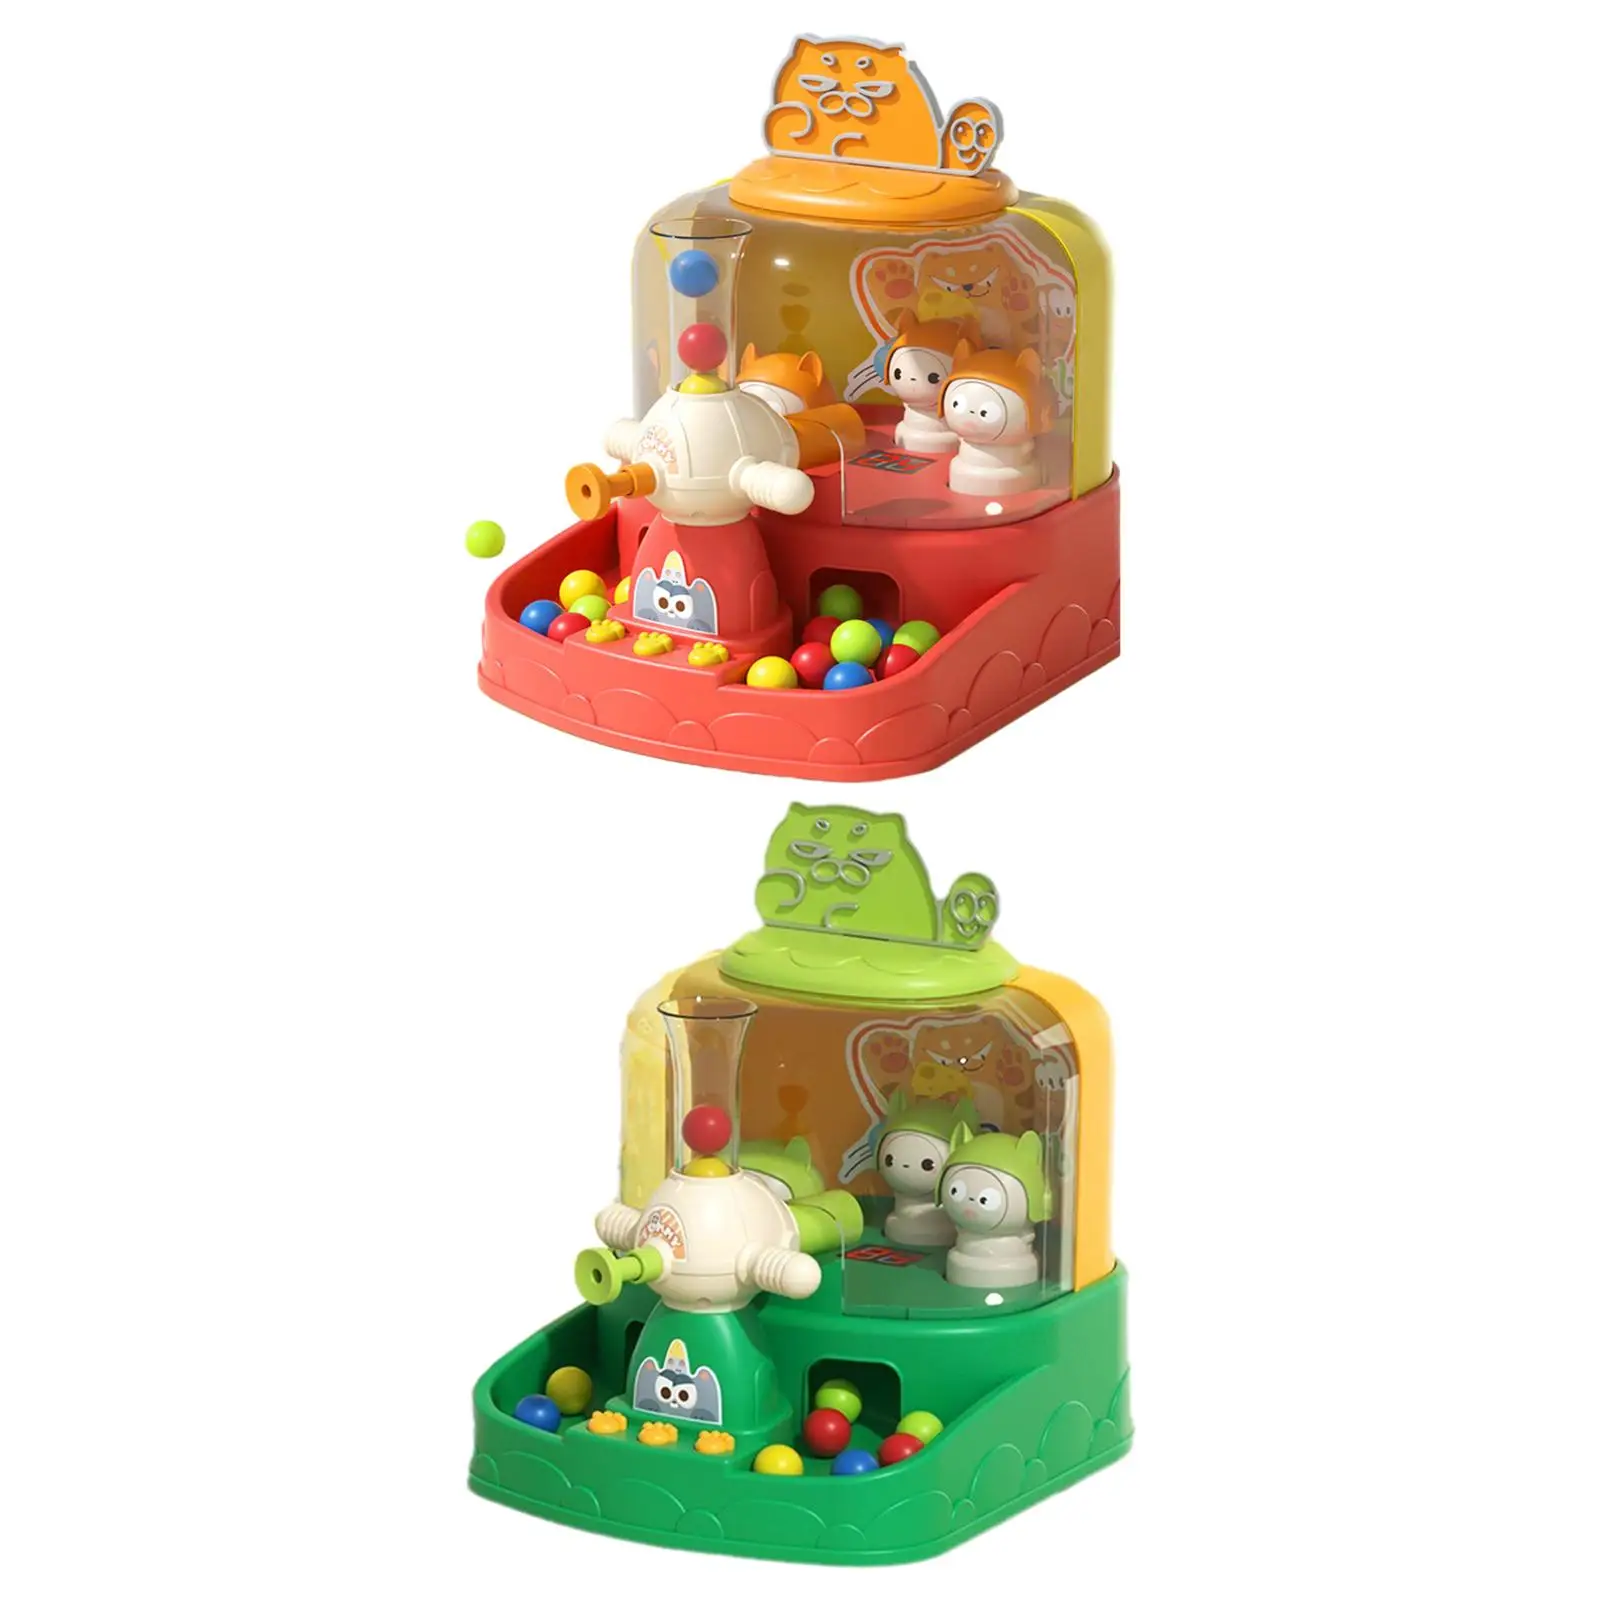 

Mini Electronic Arcade Game Developmental Montessori Cartoon Whack Game Toy with Ball for Boys Girls Kids Children Easter